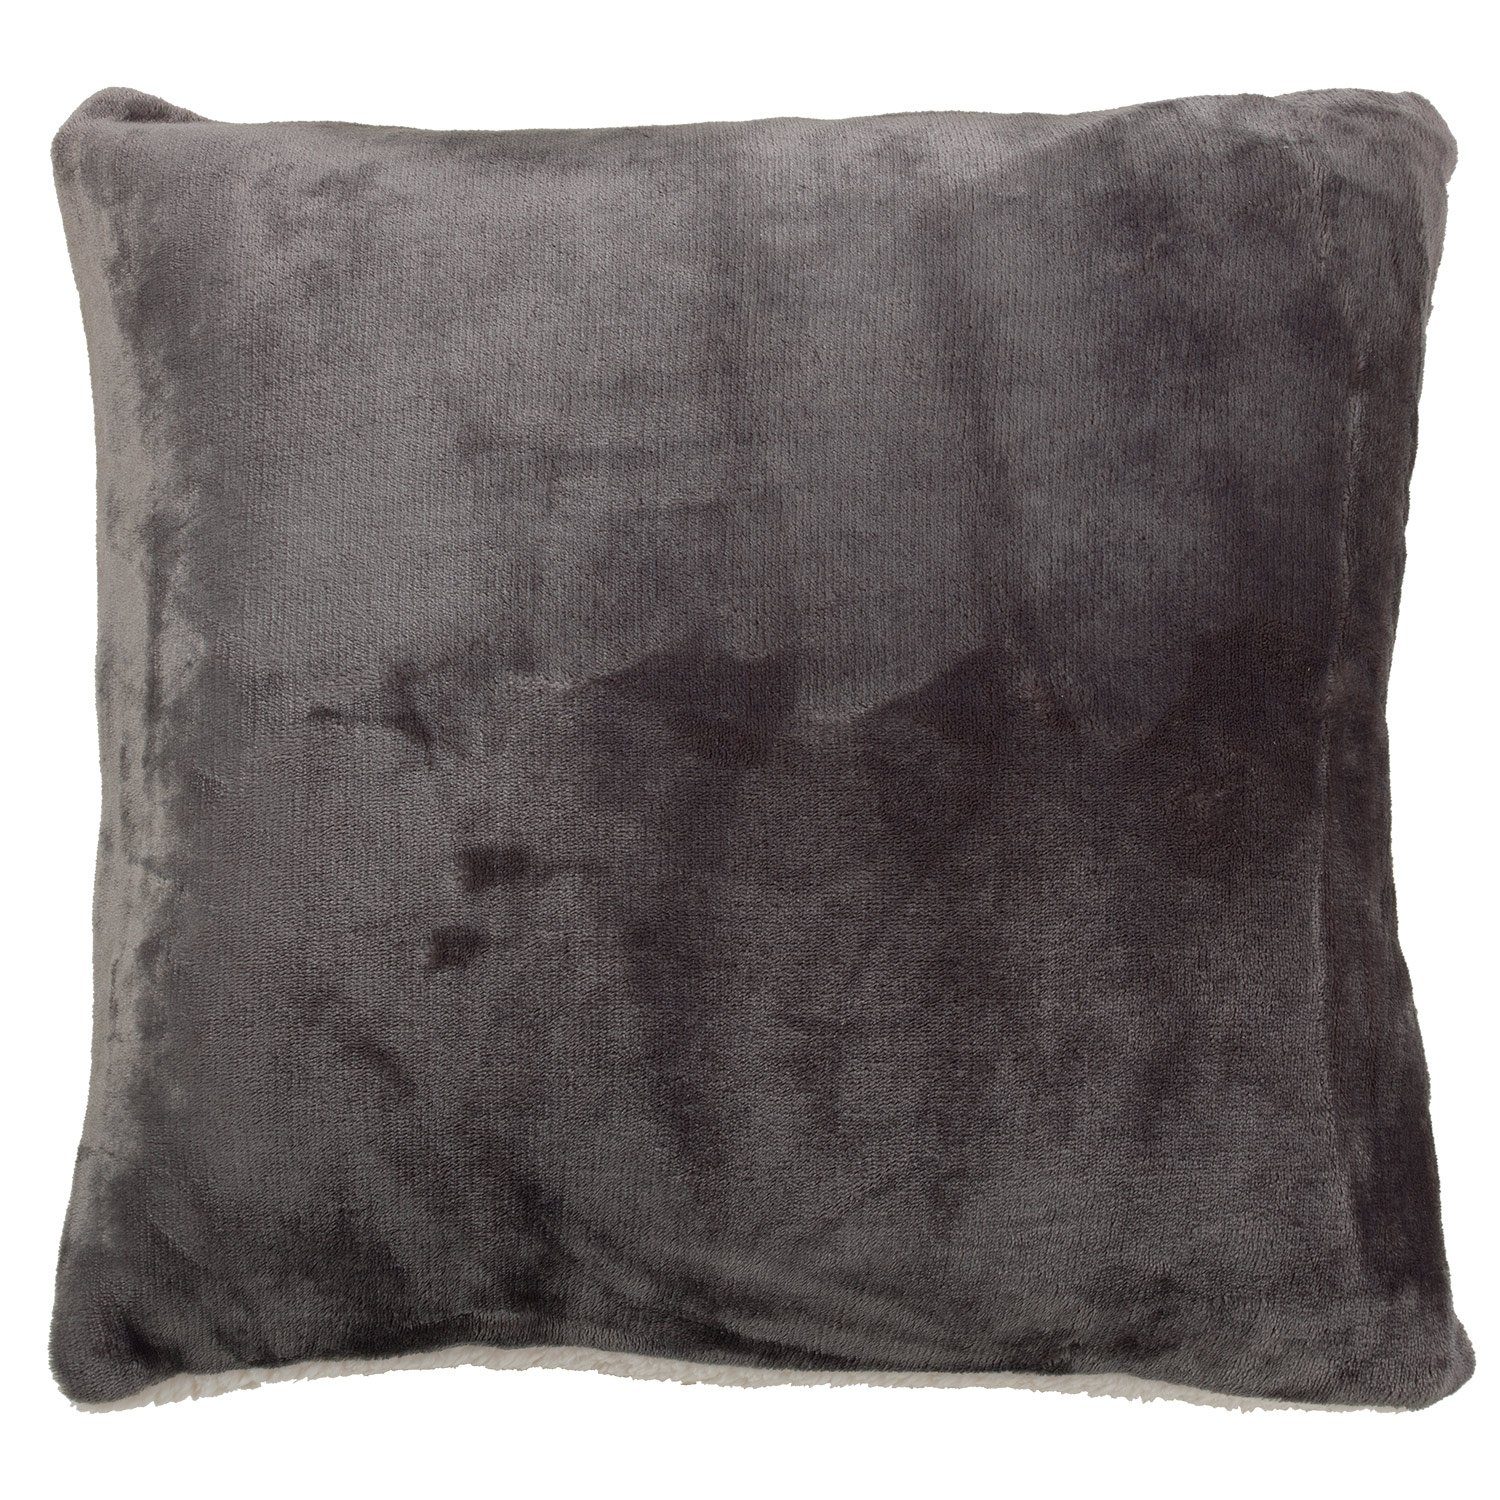 Kissenhülle SHERPA dunkelgrau, Grau, Fell, 50 x 50 cm, Home4You (1 Stück) | Kissenbezüge